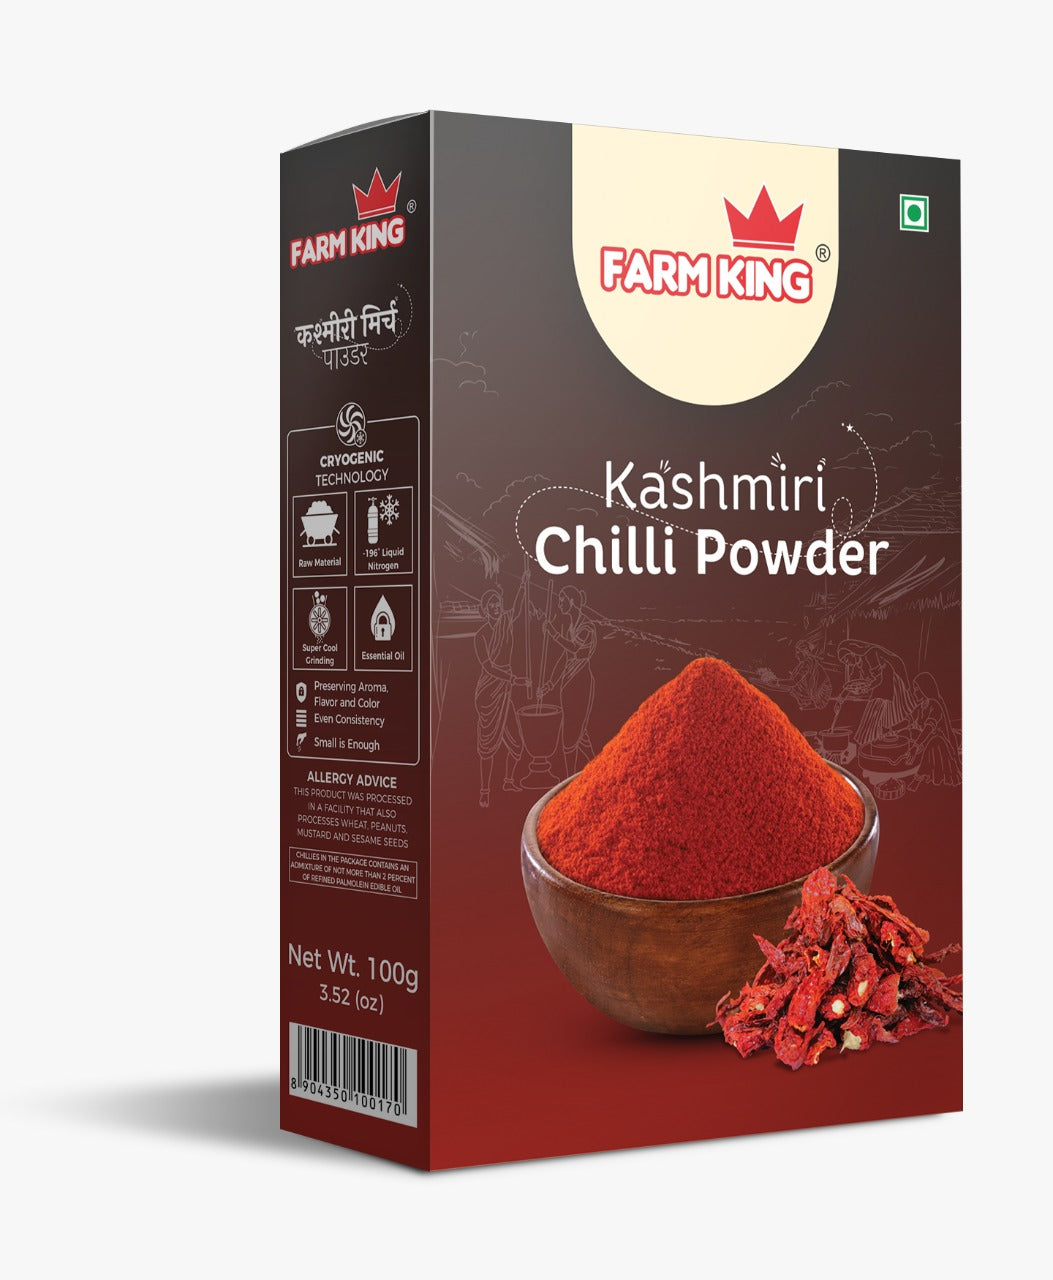 FarmKing - Spice - Kasmiri Chili Powder - 100gm Box